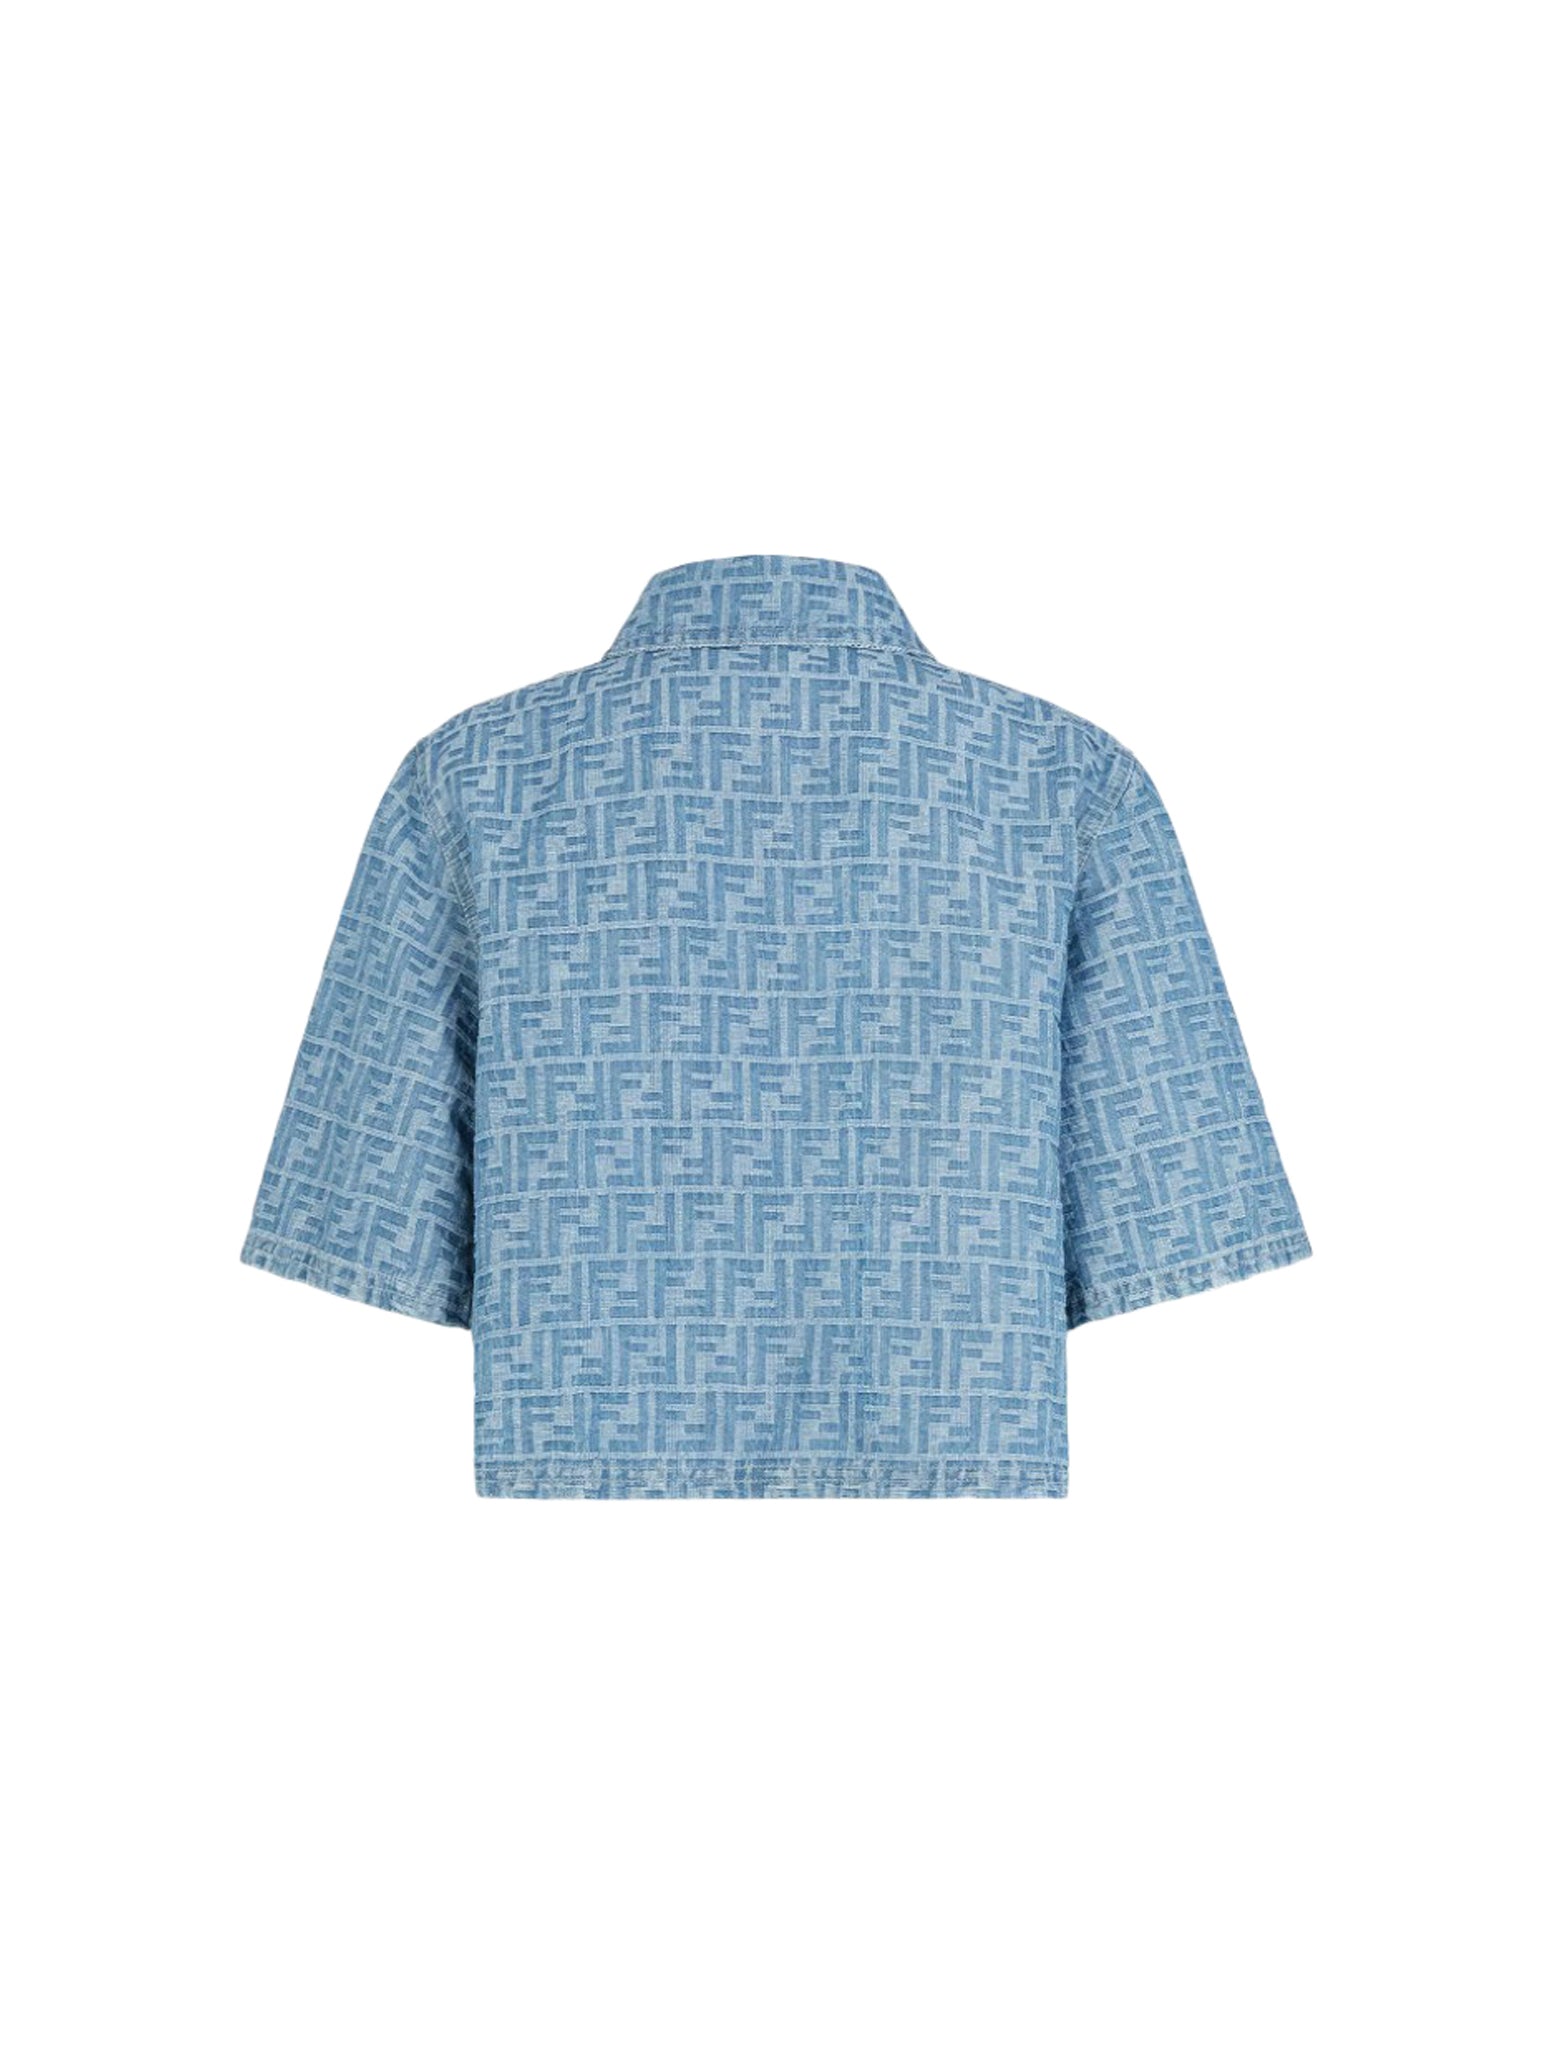 Denim jacket with FF print in light blue